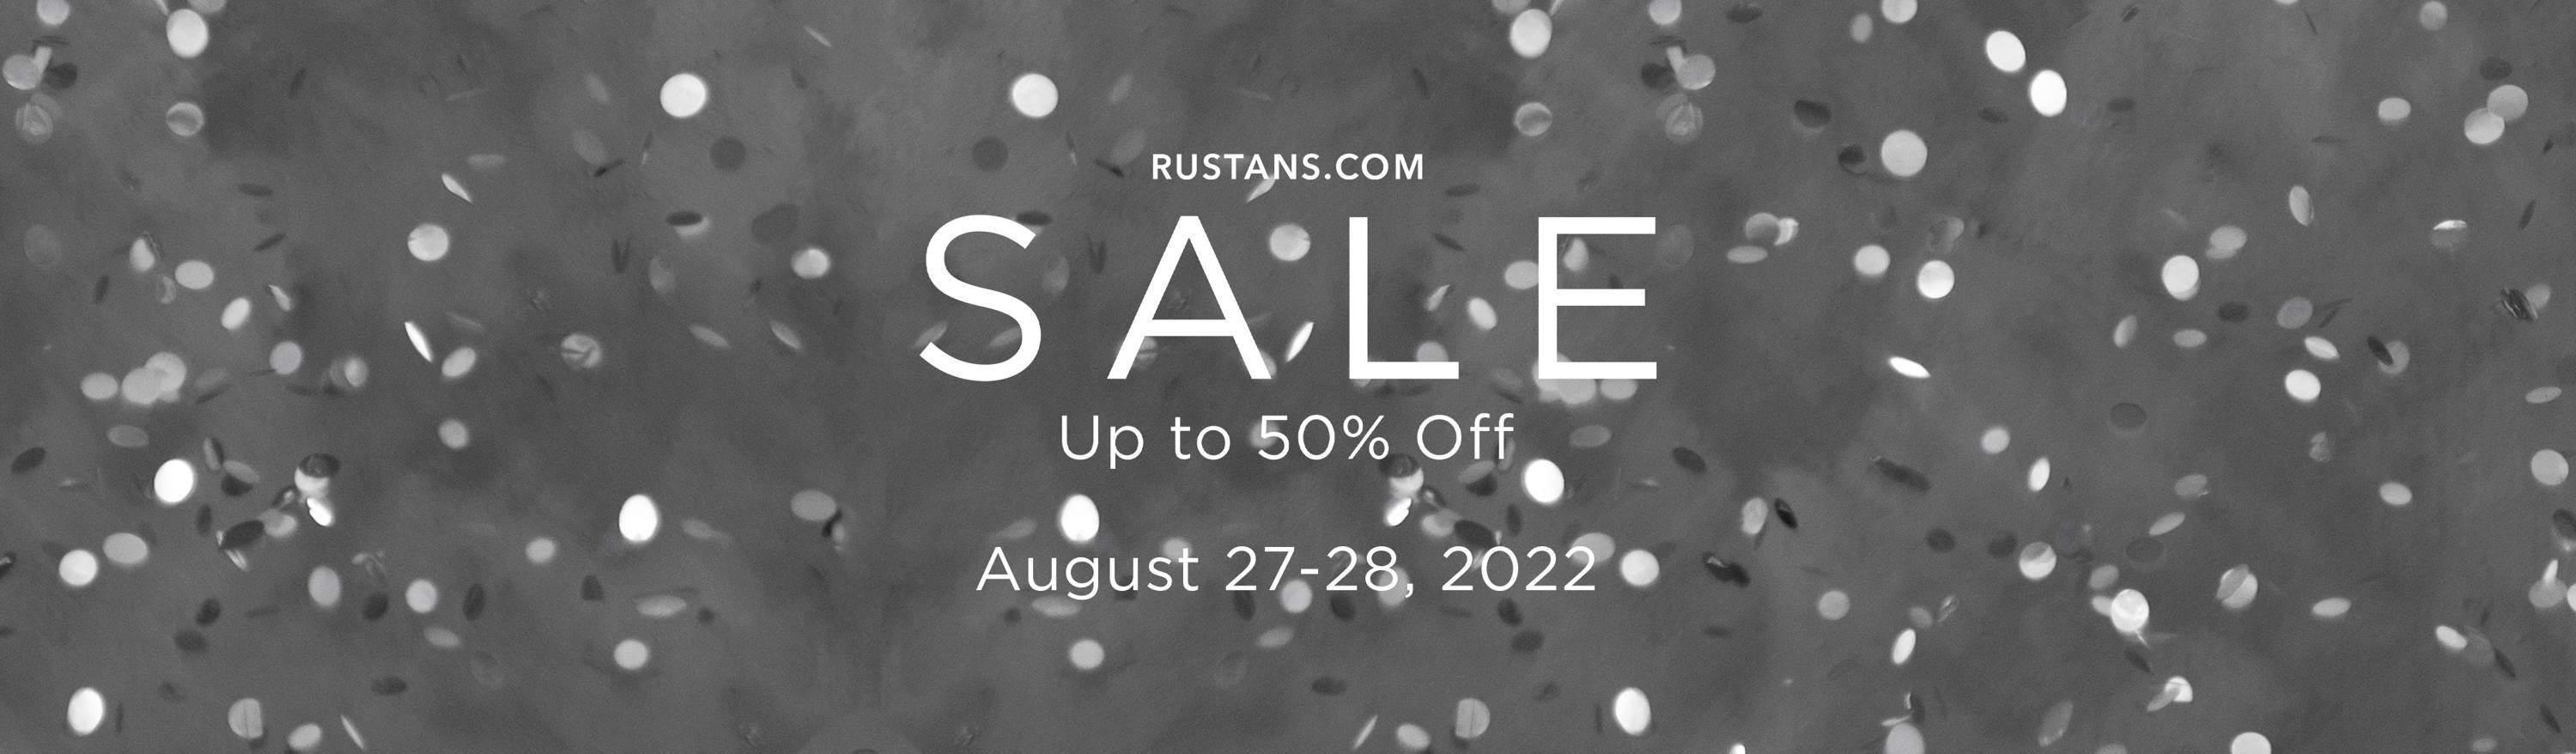 Rustans.com Anniversary Sale: All Promos